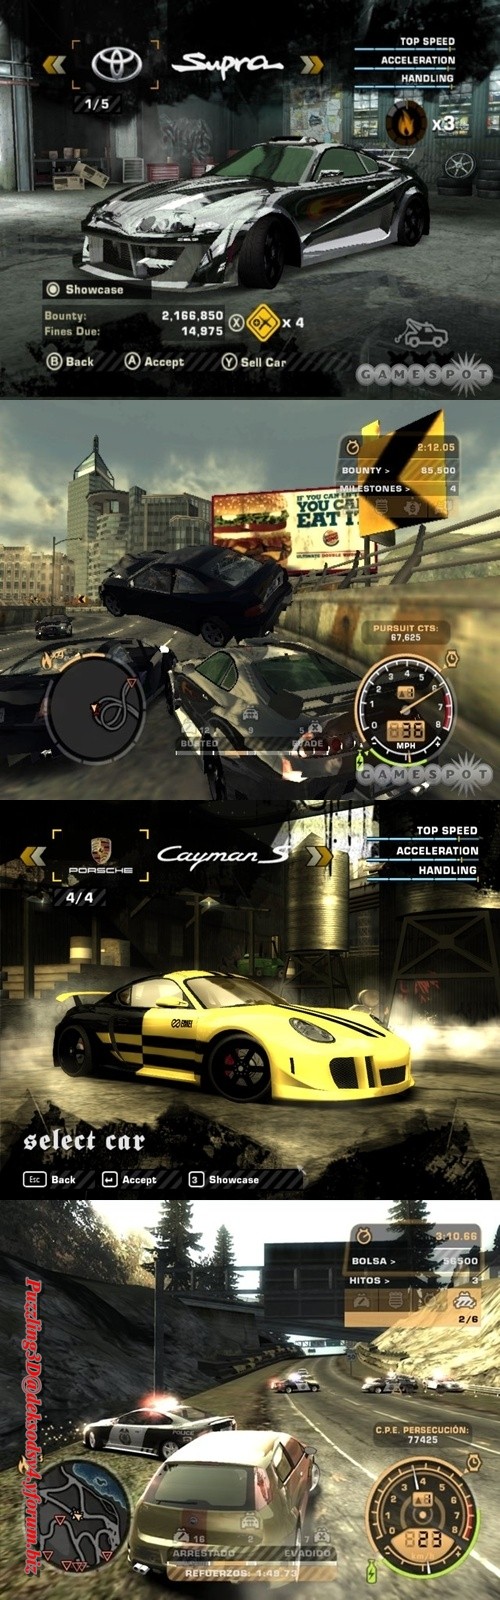 [PC] Need For Speed : Most Wanted 2005 Thai แถมภาค 2012 [ฺBitTorent + Repack + Update + Patch ภาษาไทย + Crack]	แถมการเพิ่มรถ และอื่นๆ รายละเอียดด้านใน... - Page 6 Need-f10